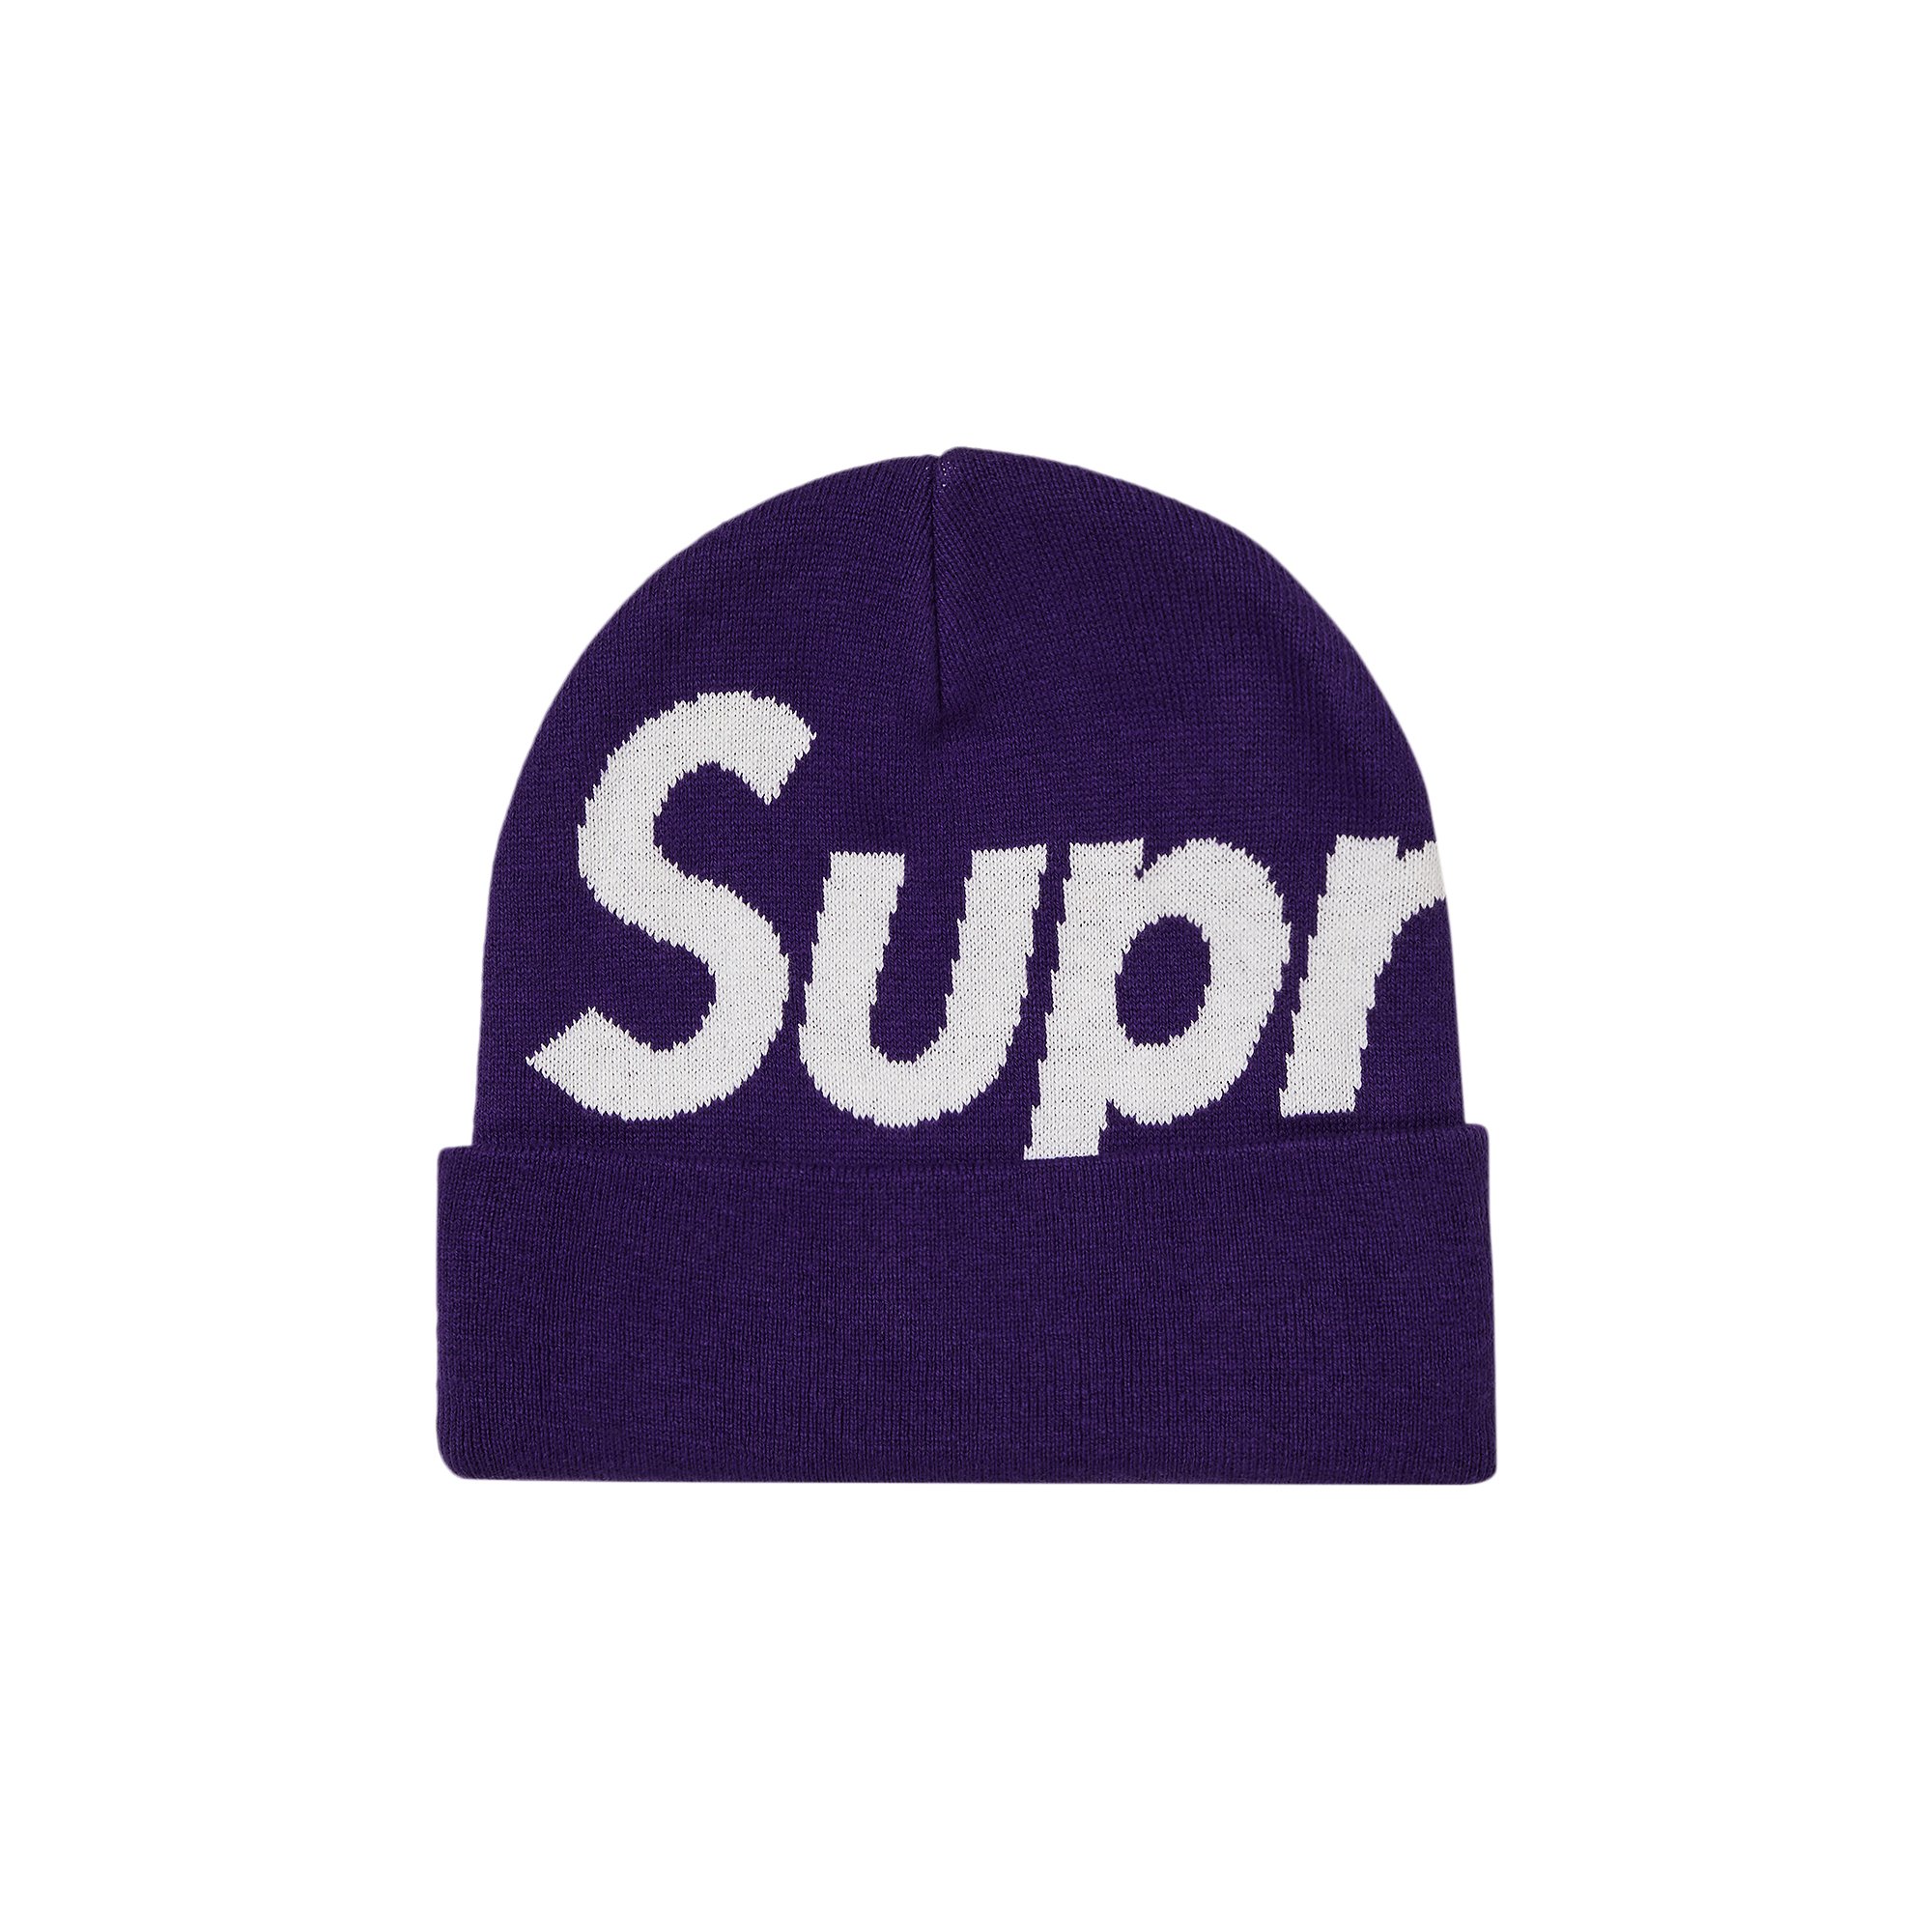 Шапка-бини Supreme с большим логотипом, темно-фиолетовая